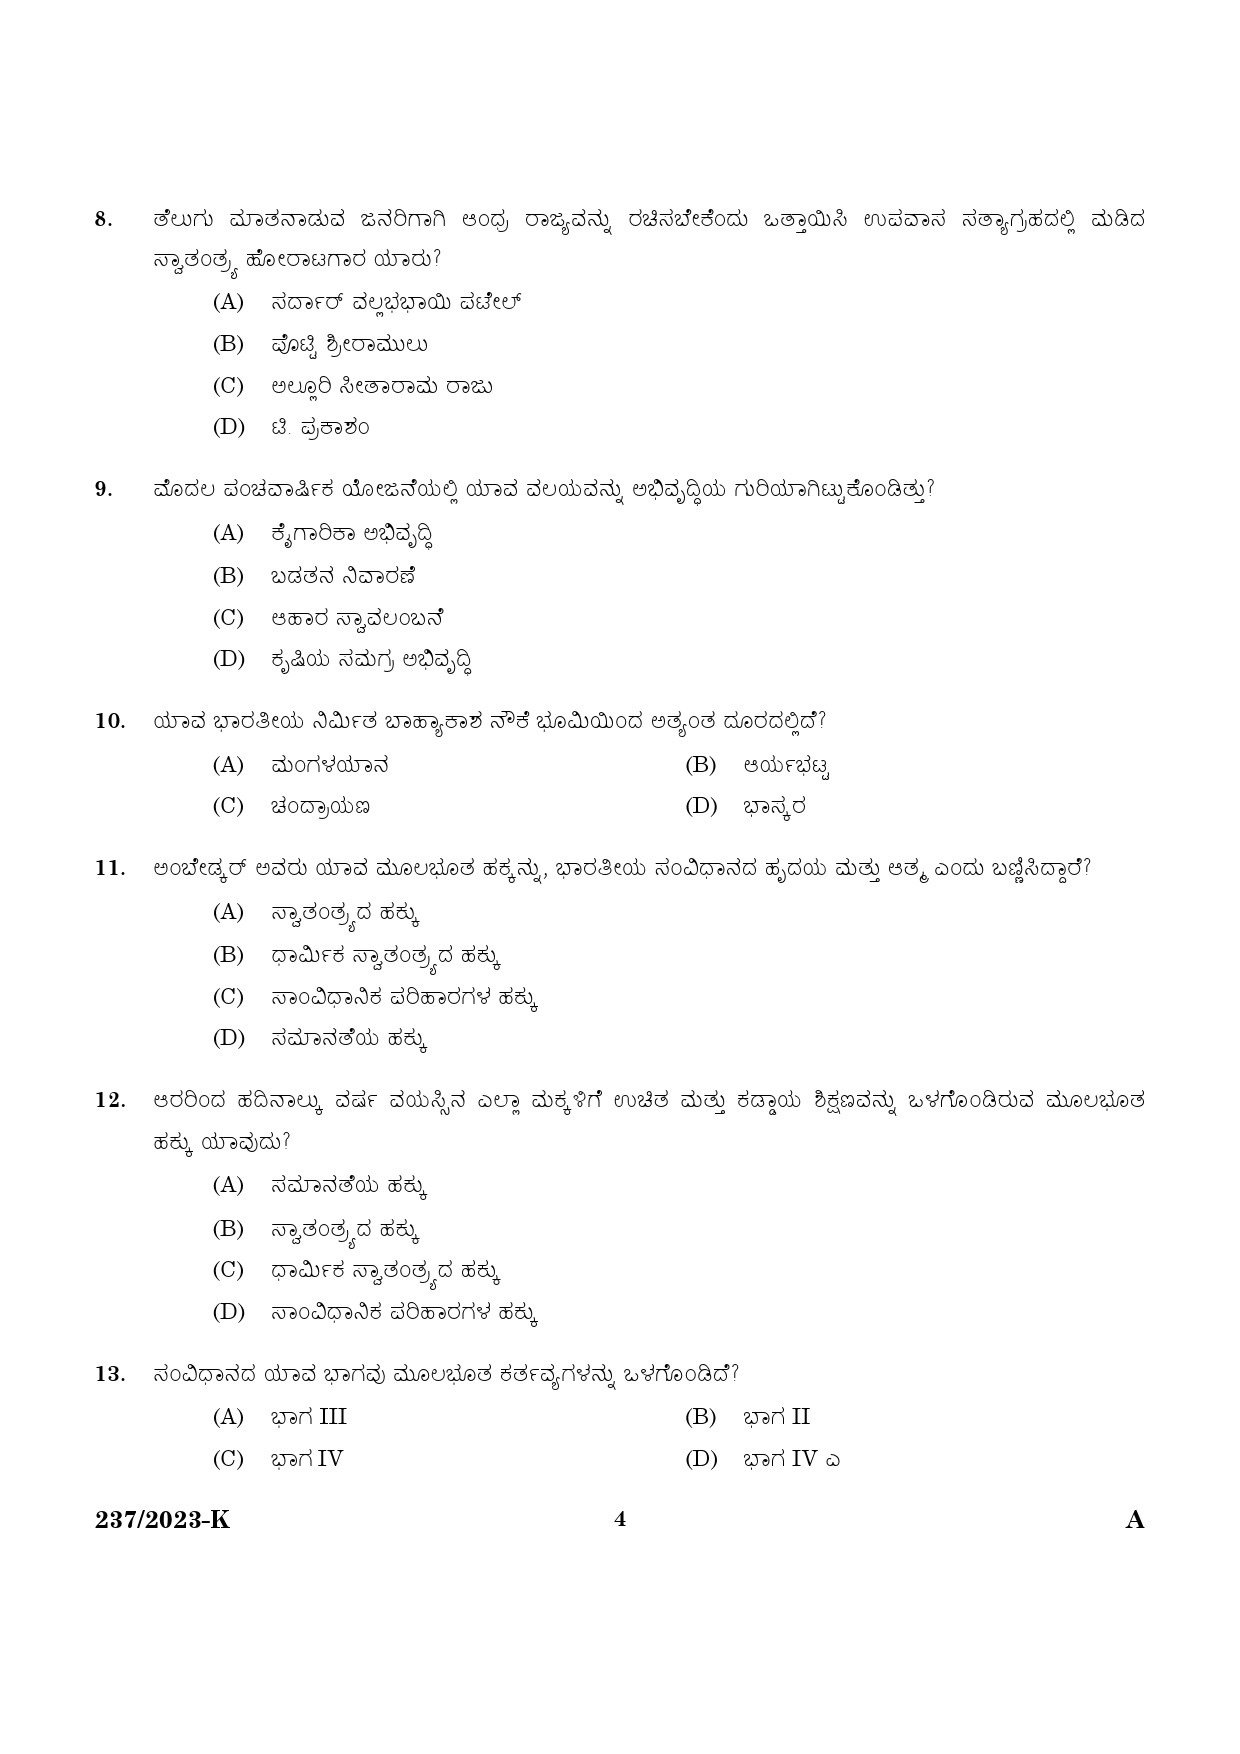 KPSC Forest Driver Kannada Exam 2023 Code 2372023 K 2